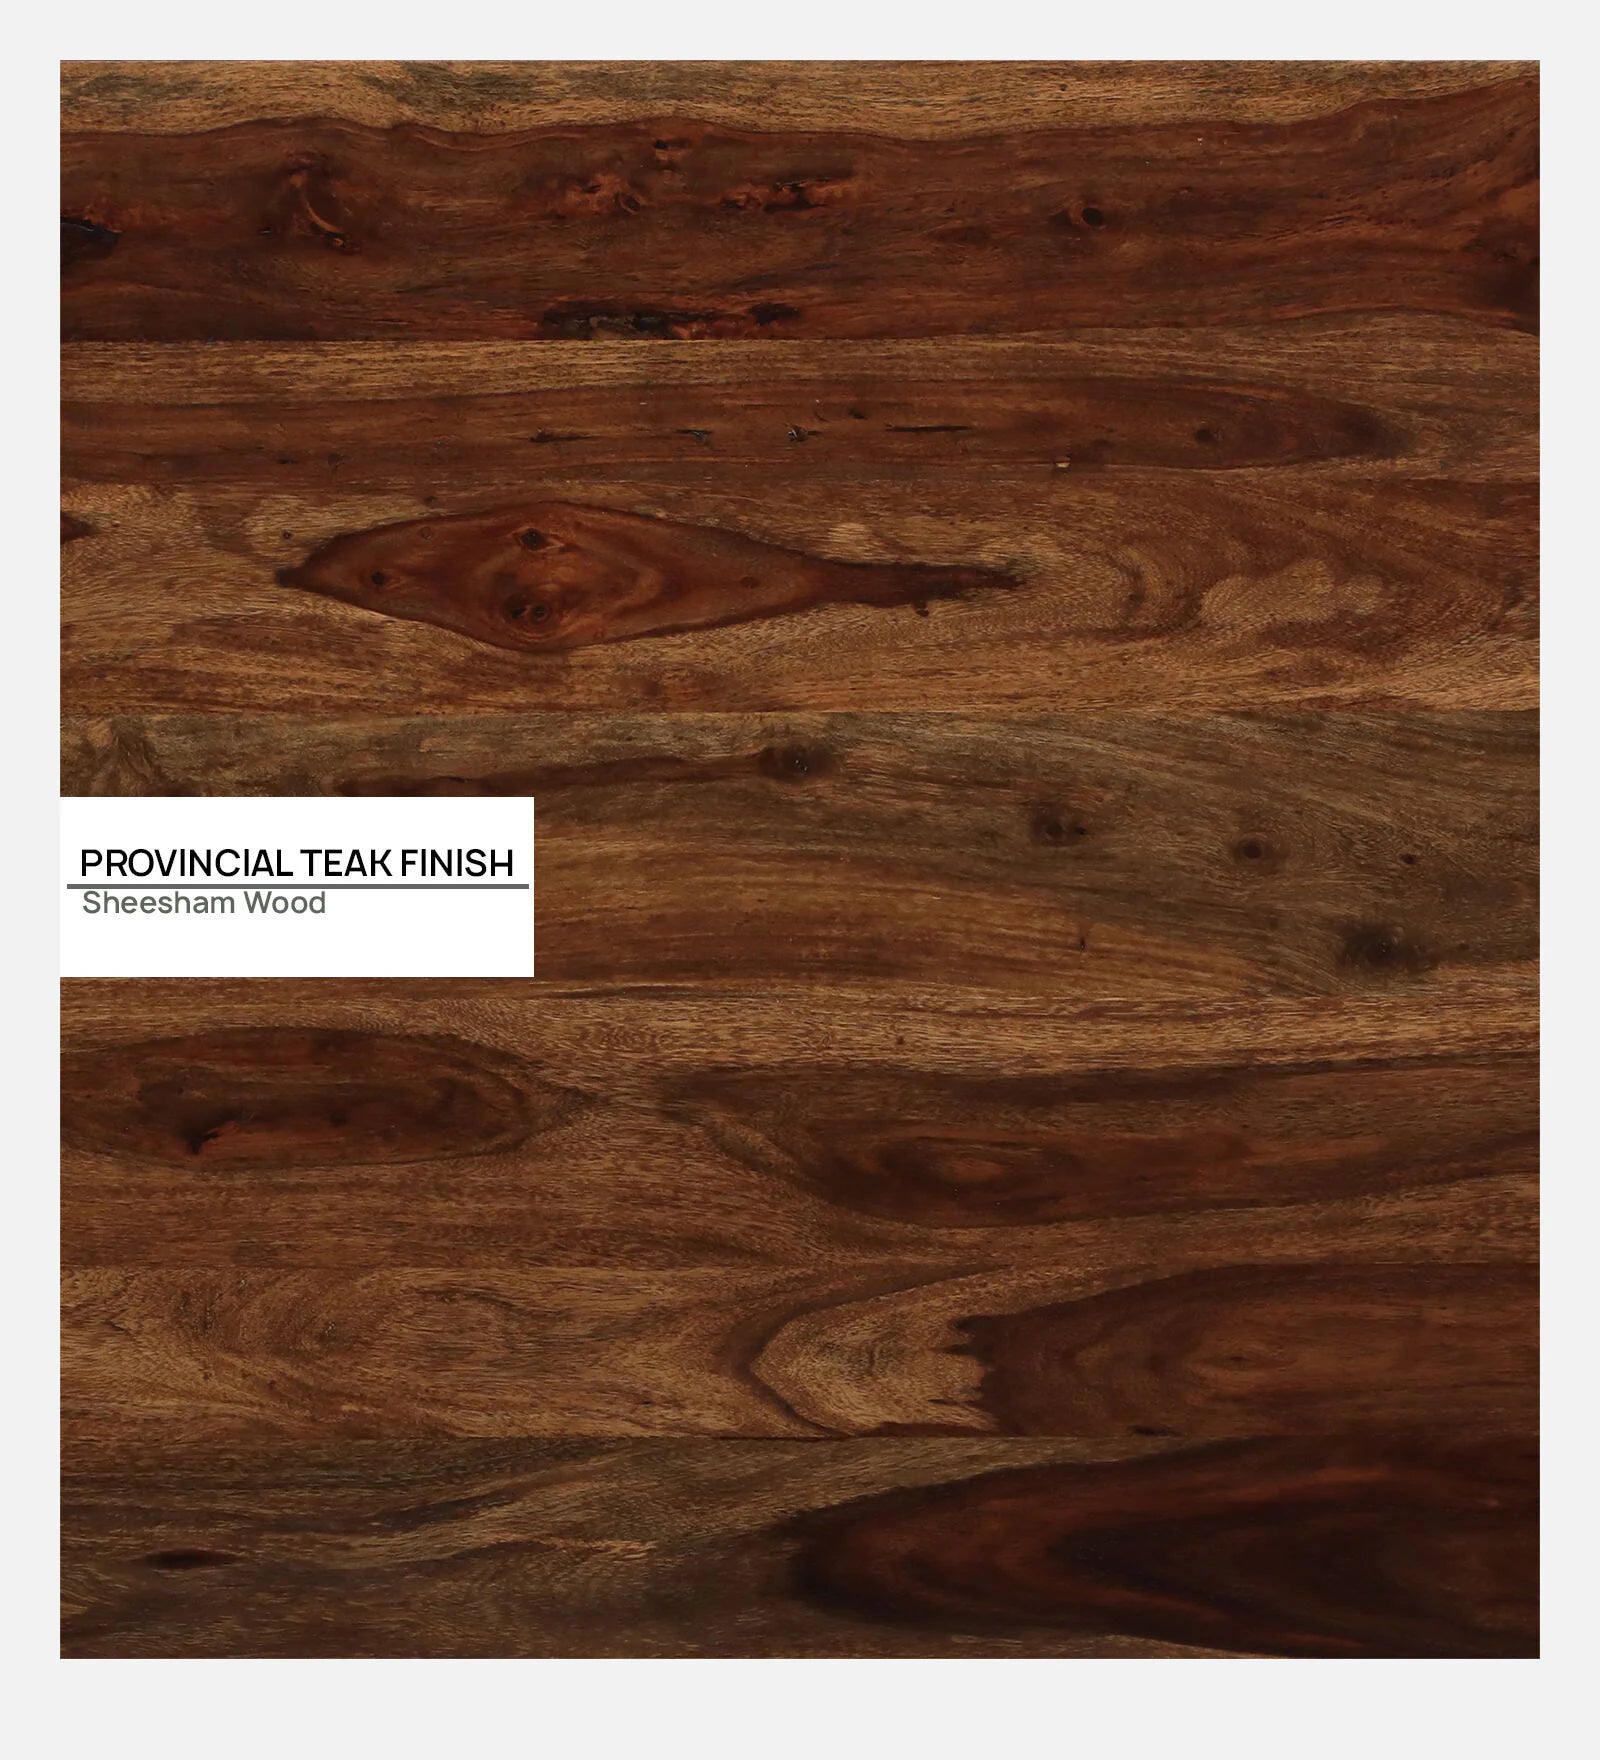 Sheerel Solid Wood 4 Seater Round Dining Table In Honey Oak Finish - By Rajwada - Rajwada Furnish